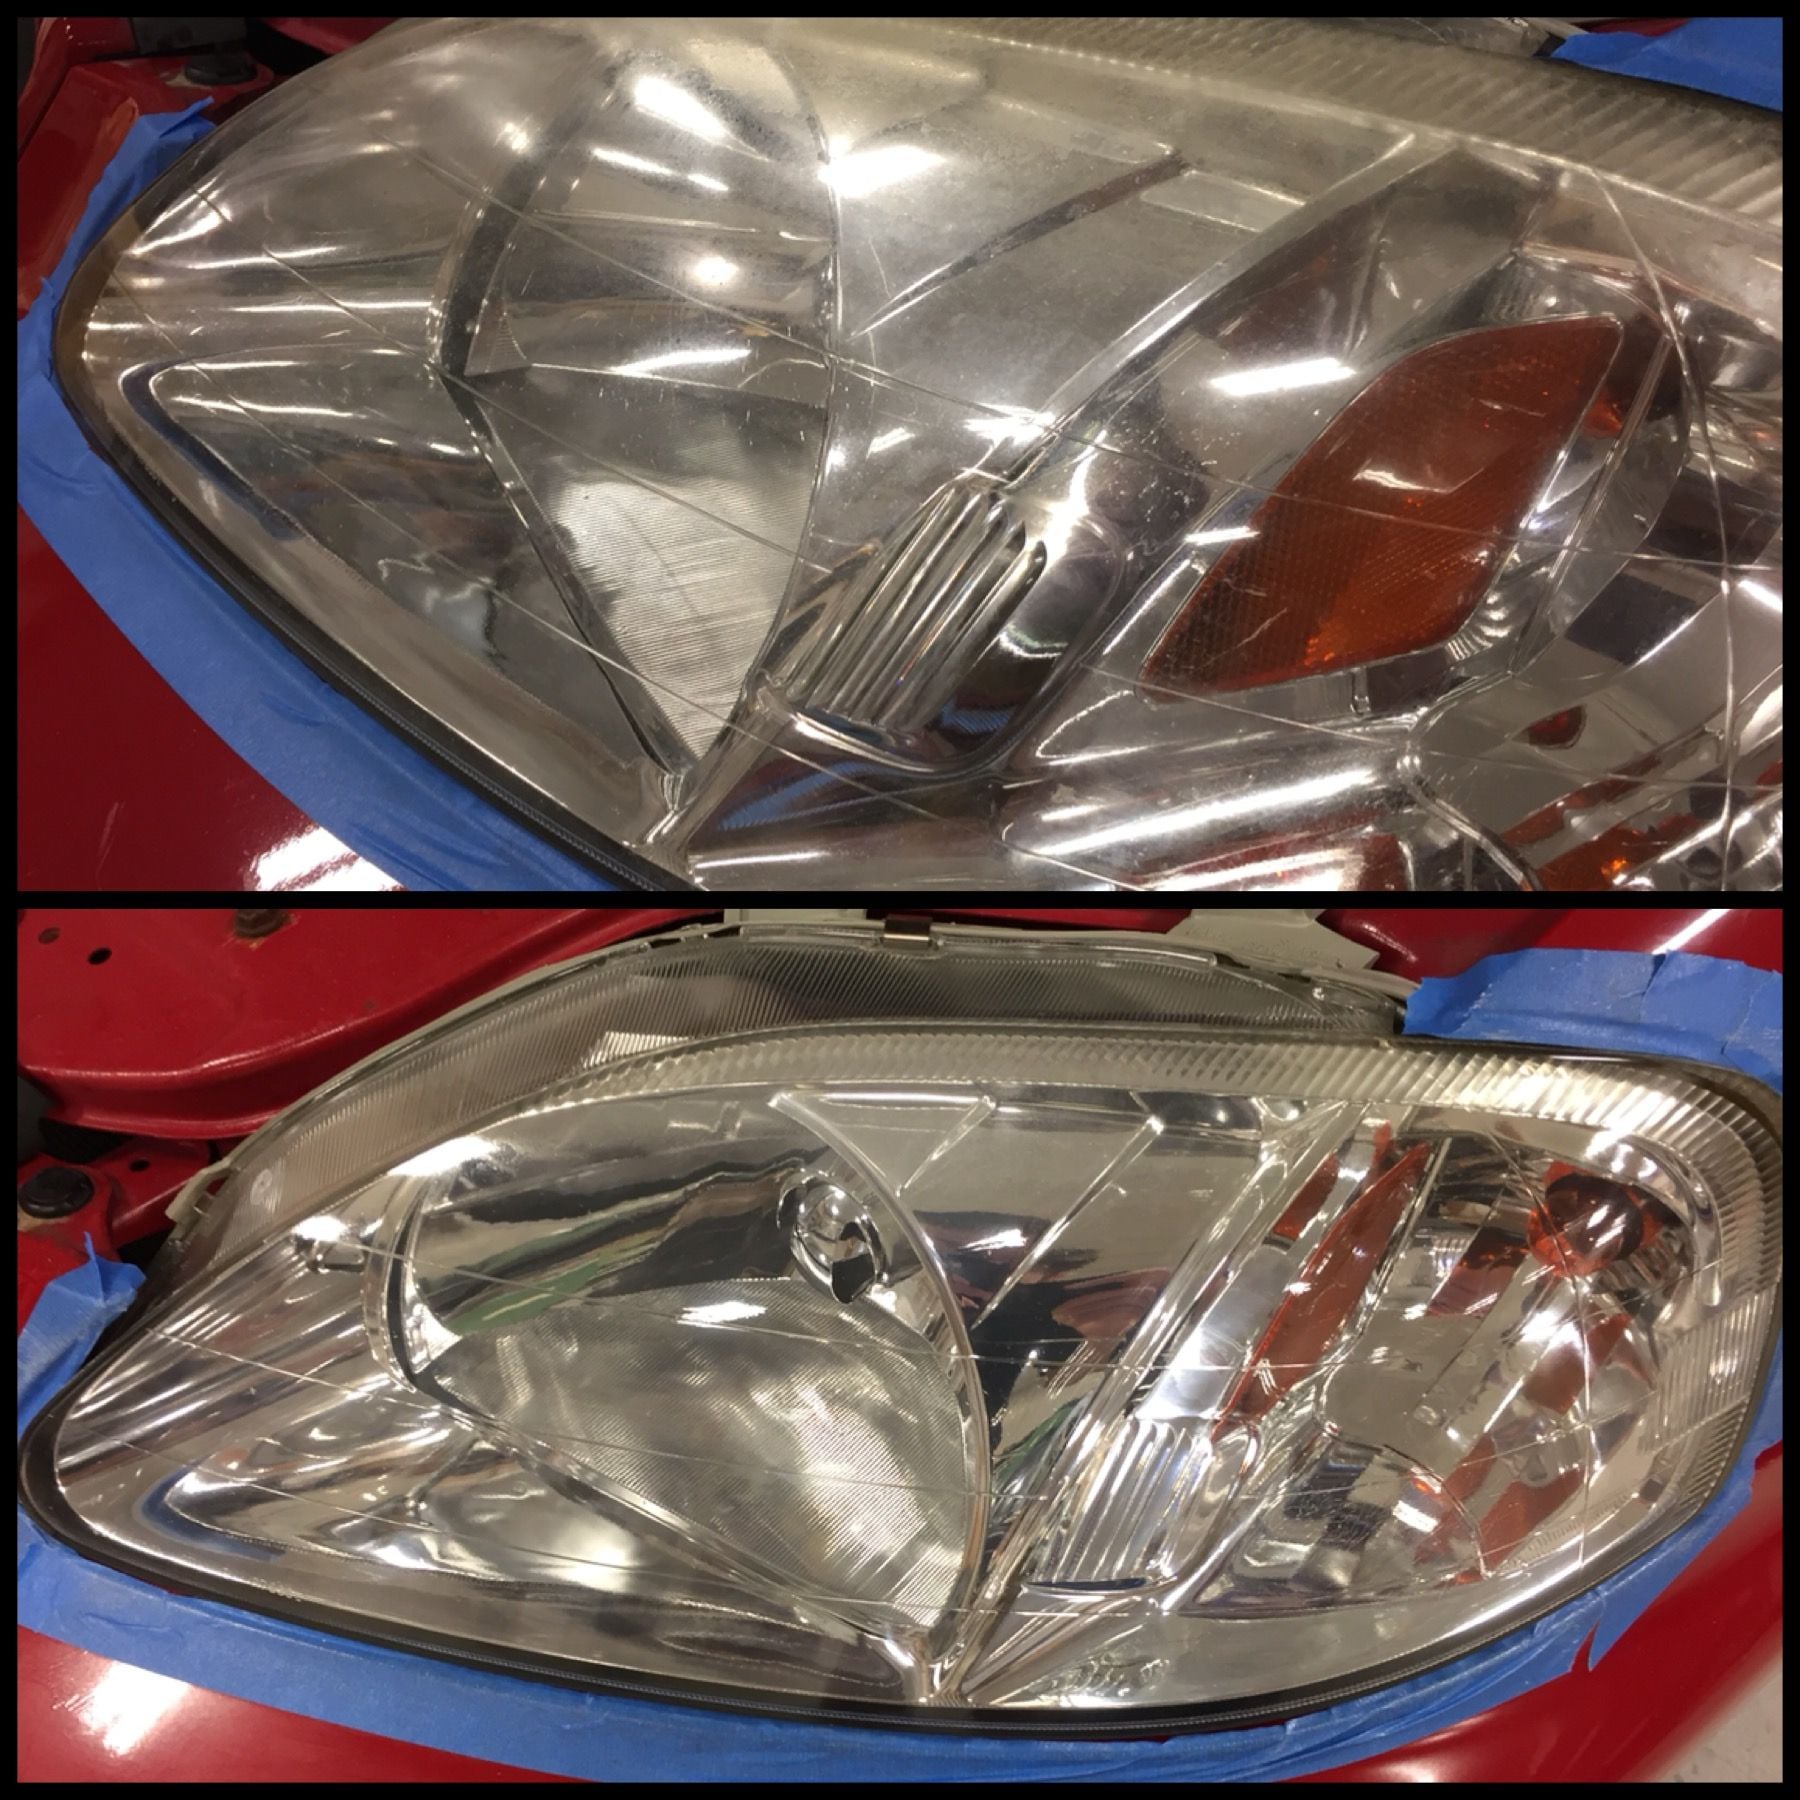 Do headlight restoration kits work?